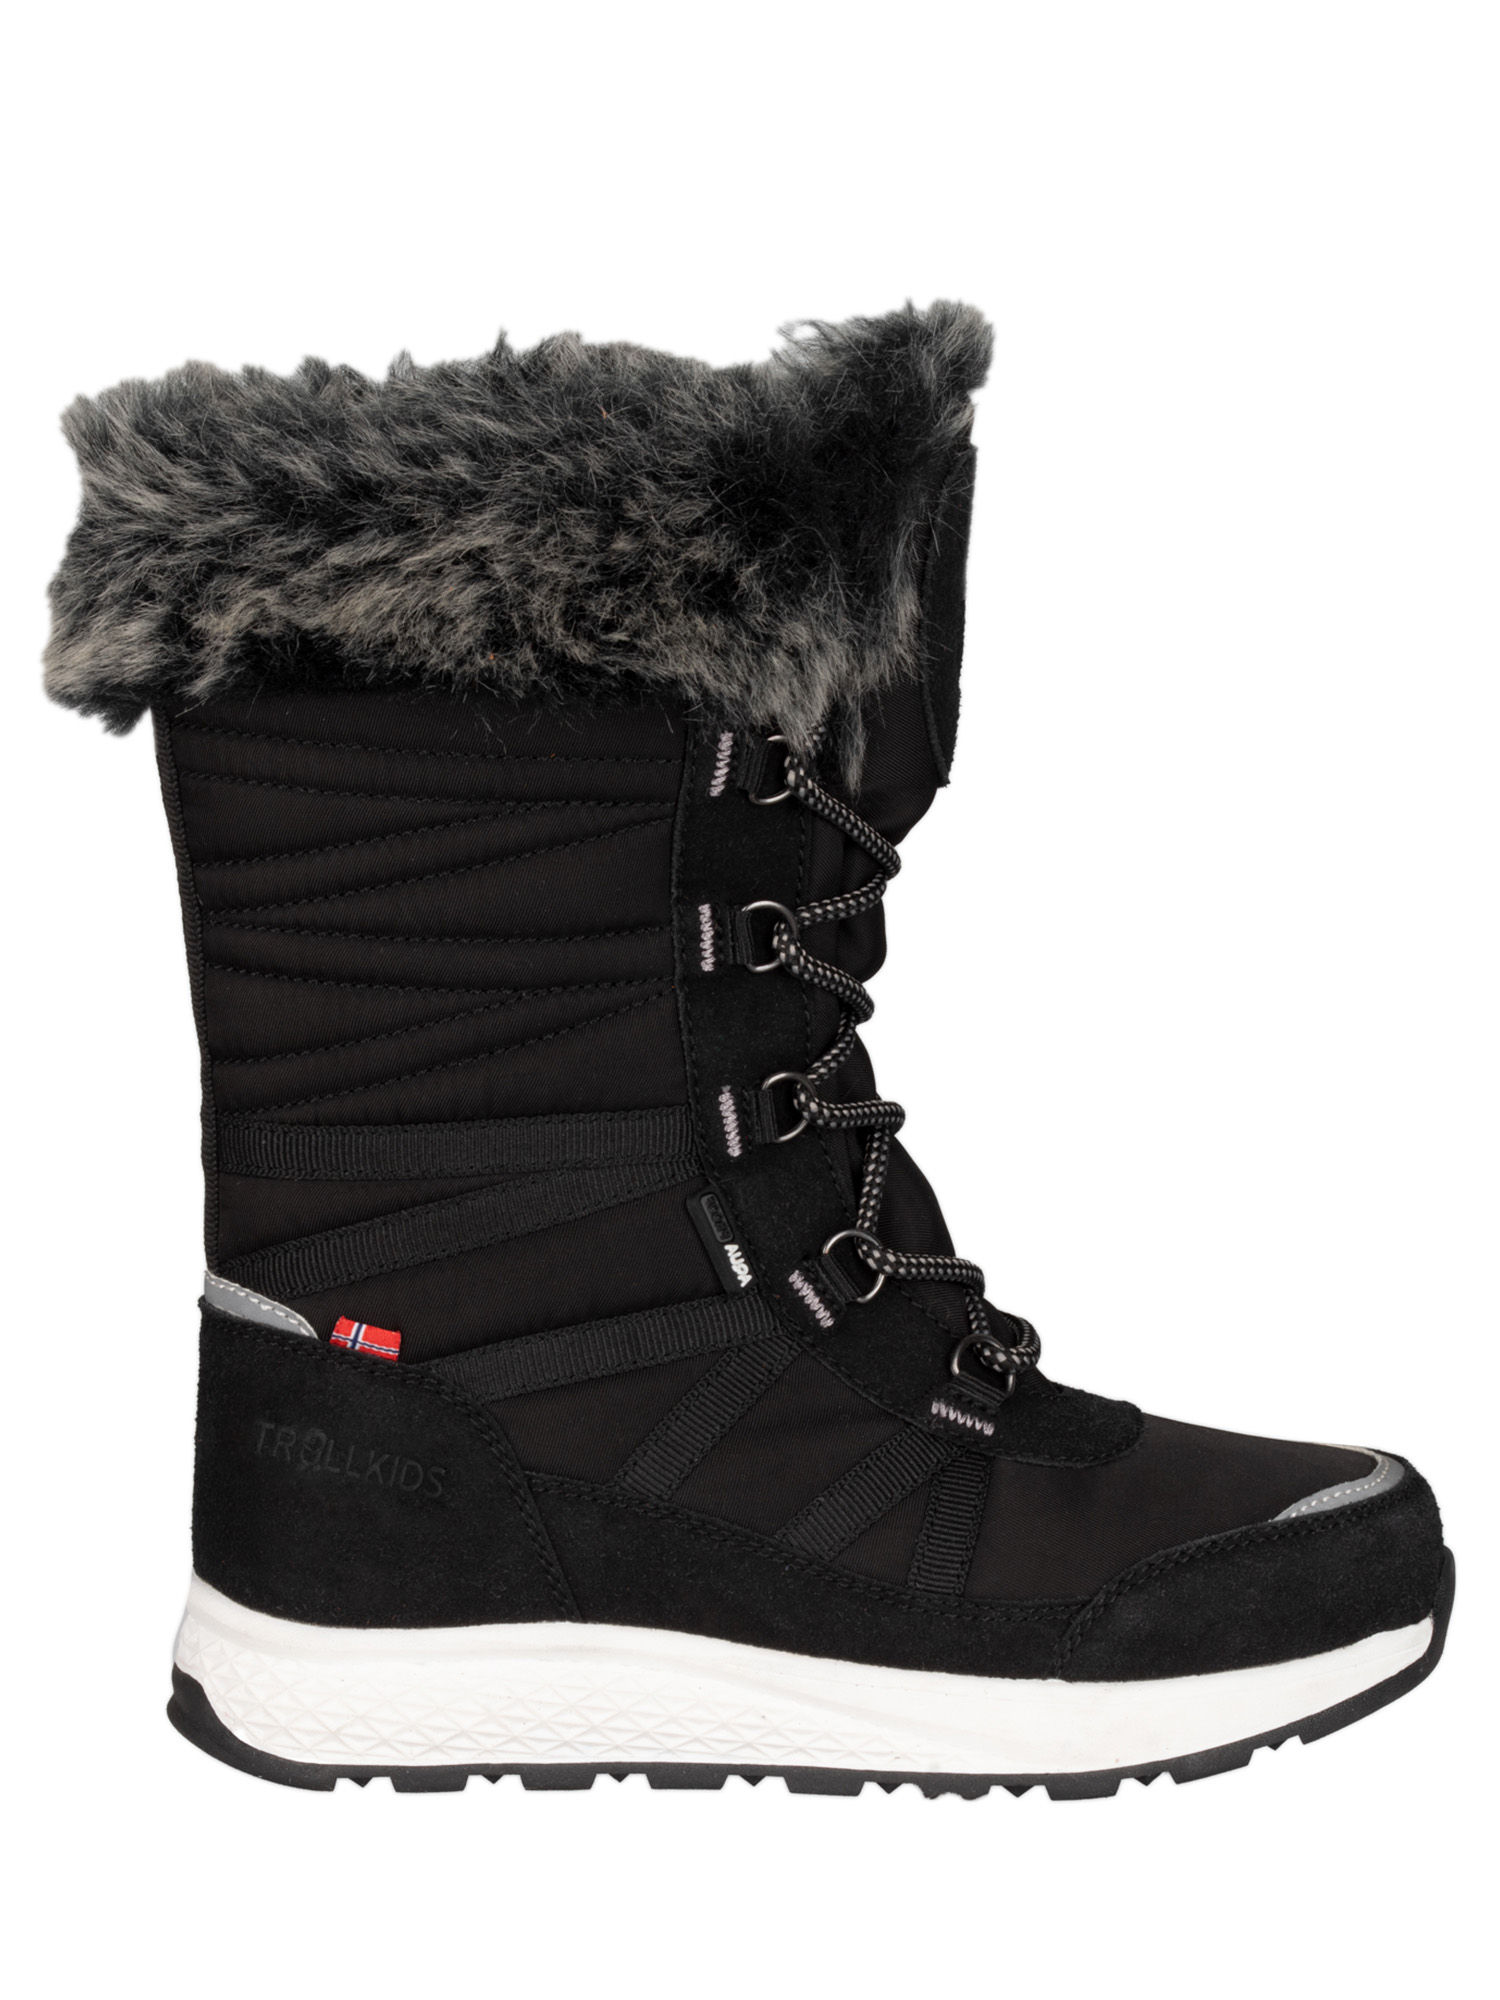 Ботинки Trollkids Girls Hemsedal Winter Boots Xt, черный, 39